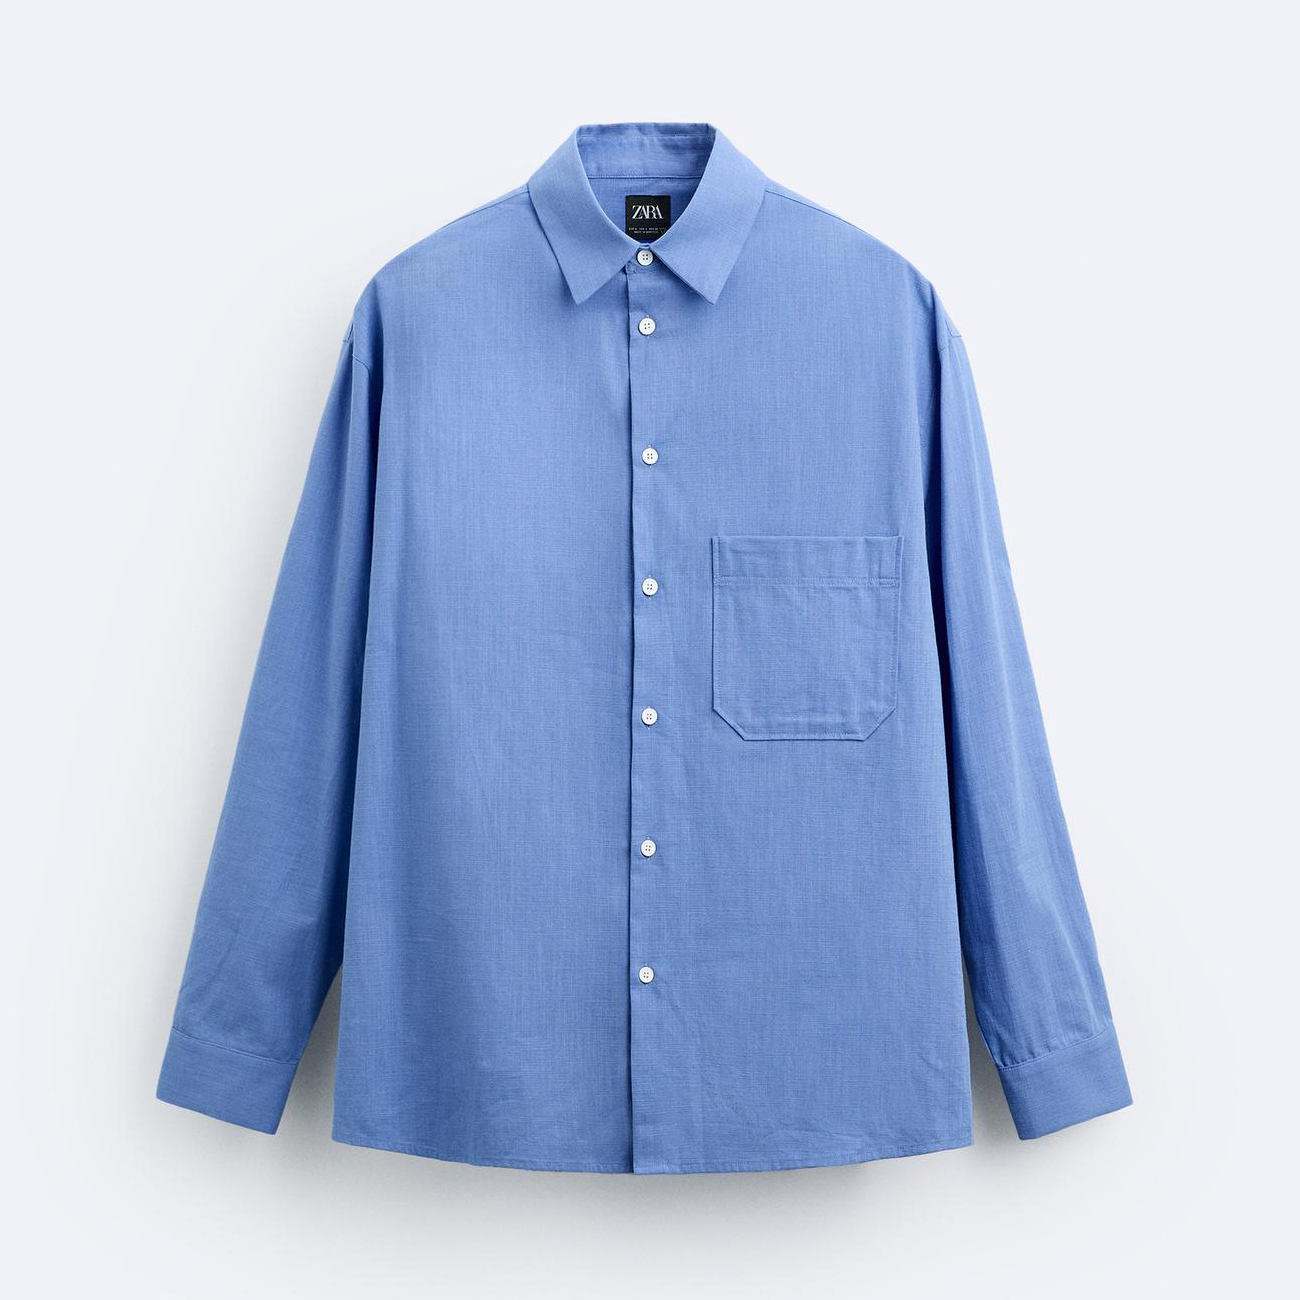 Рубашка Zara Cotton With Pocket, голубой рубашка zara kids checked shirt with contrasting pocket зеленый черный